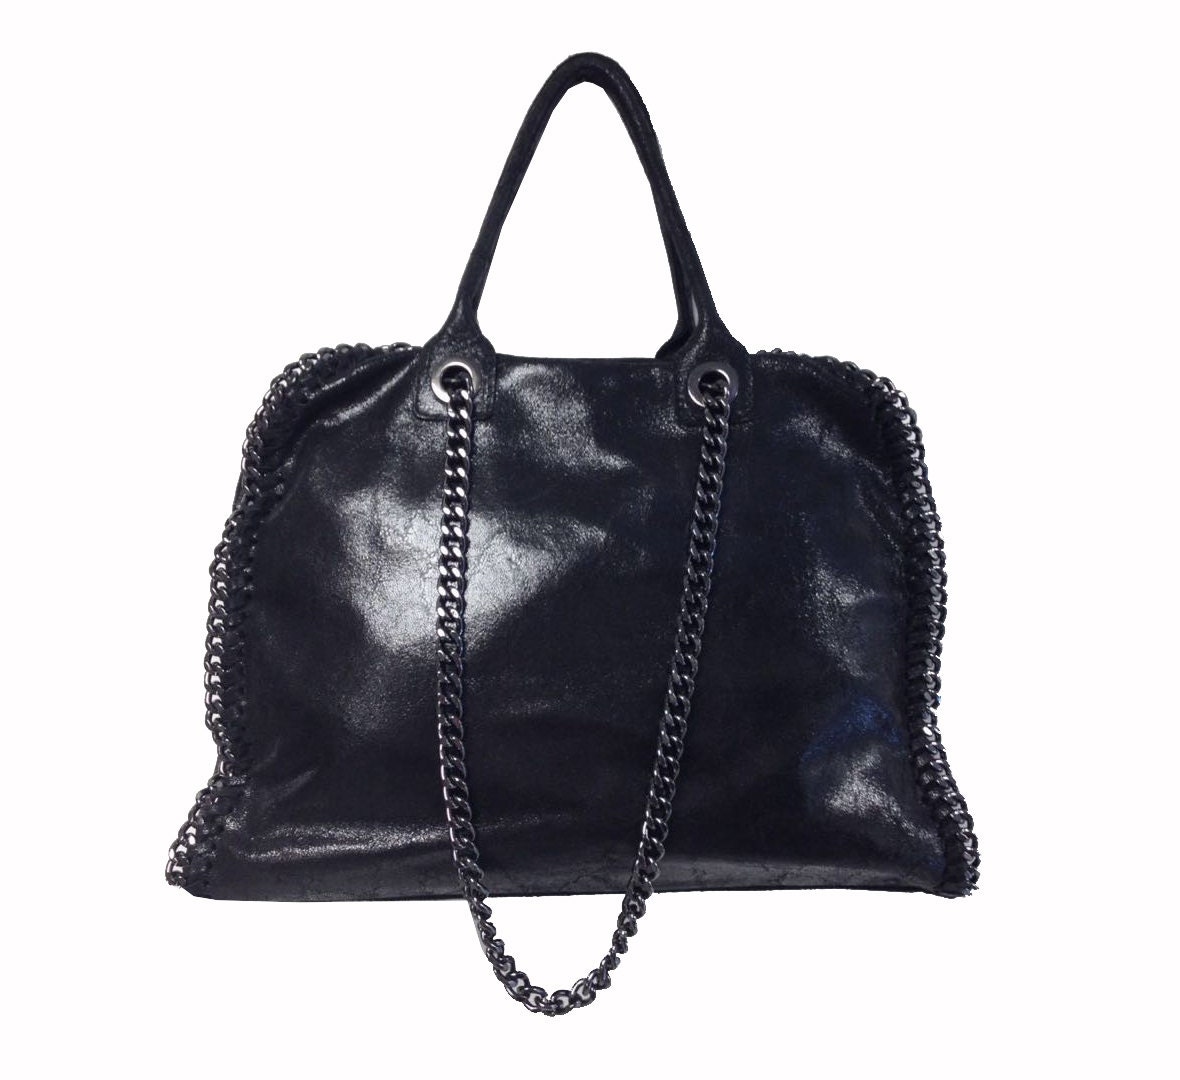 Black Genuine Leather Handbag shoulder bag by CreamBoutiqueItaly